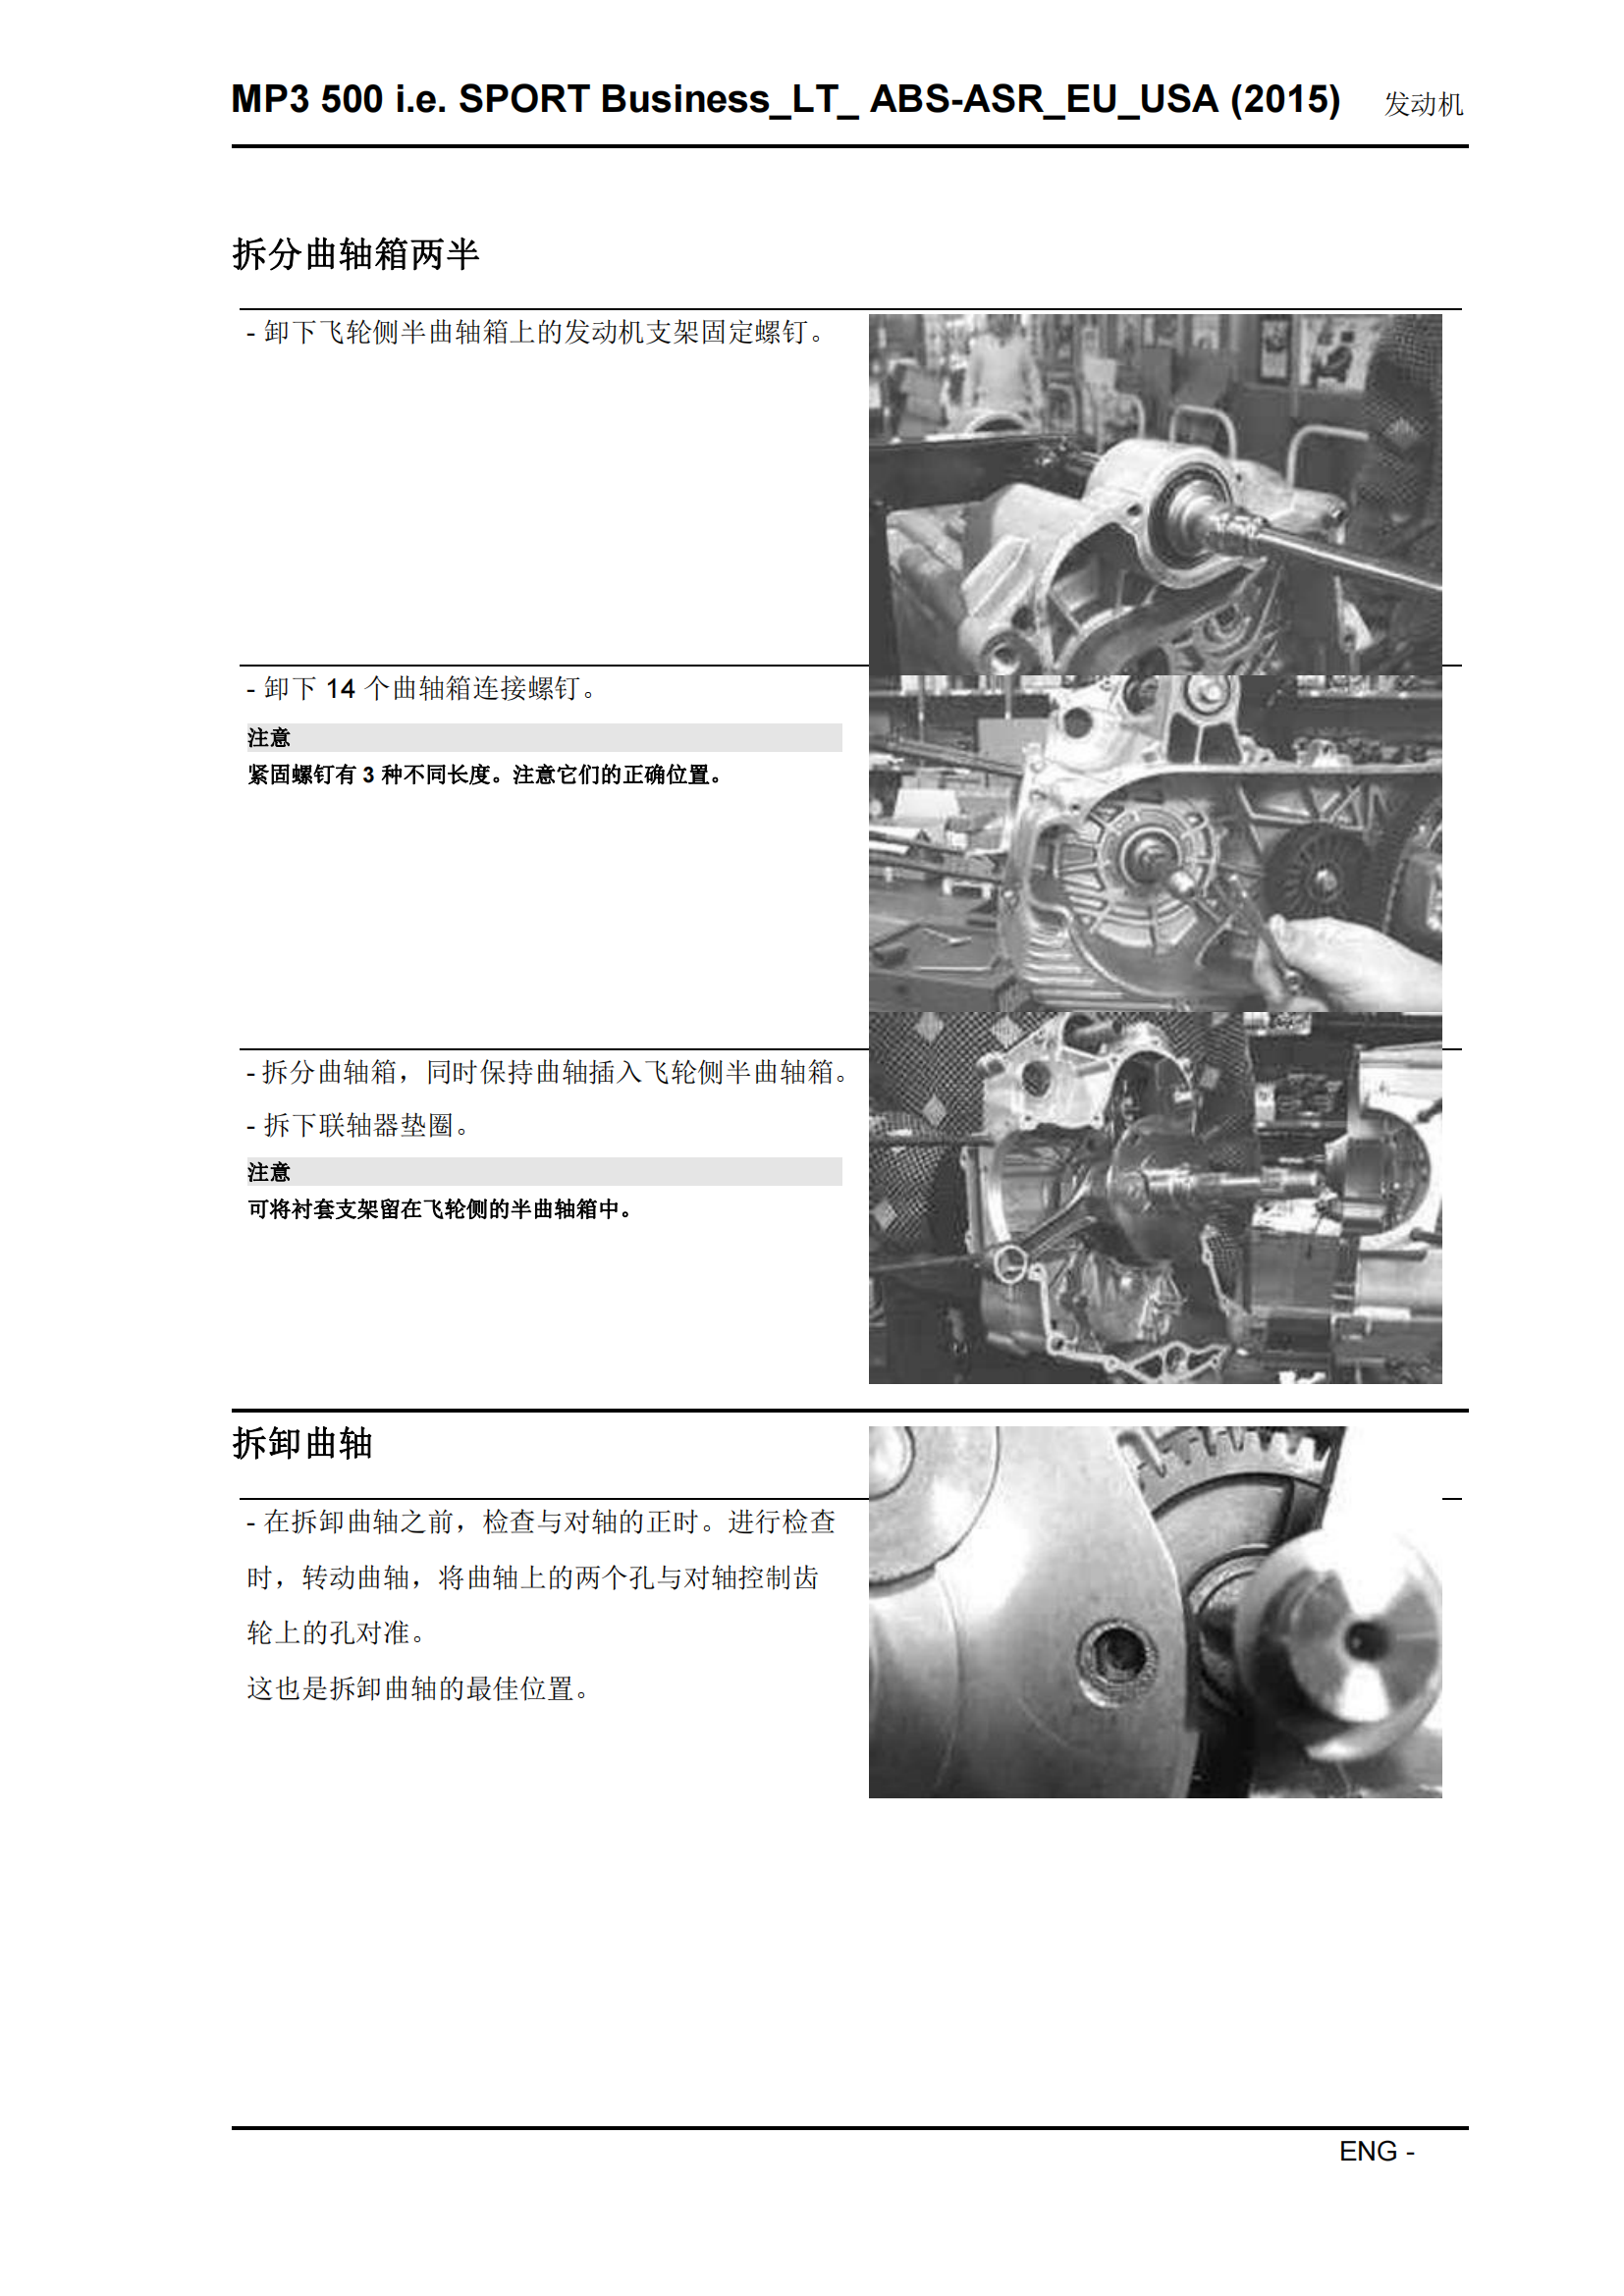 简体中文2015年比亚乔mp3 500维修手册MP3 500 i.e. SPORT Business维修手册插图4